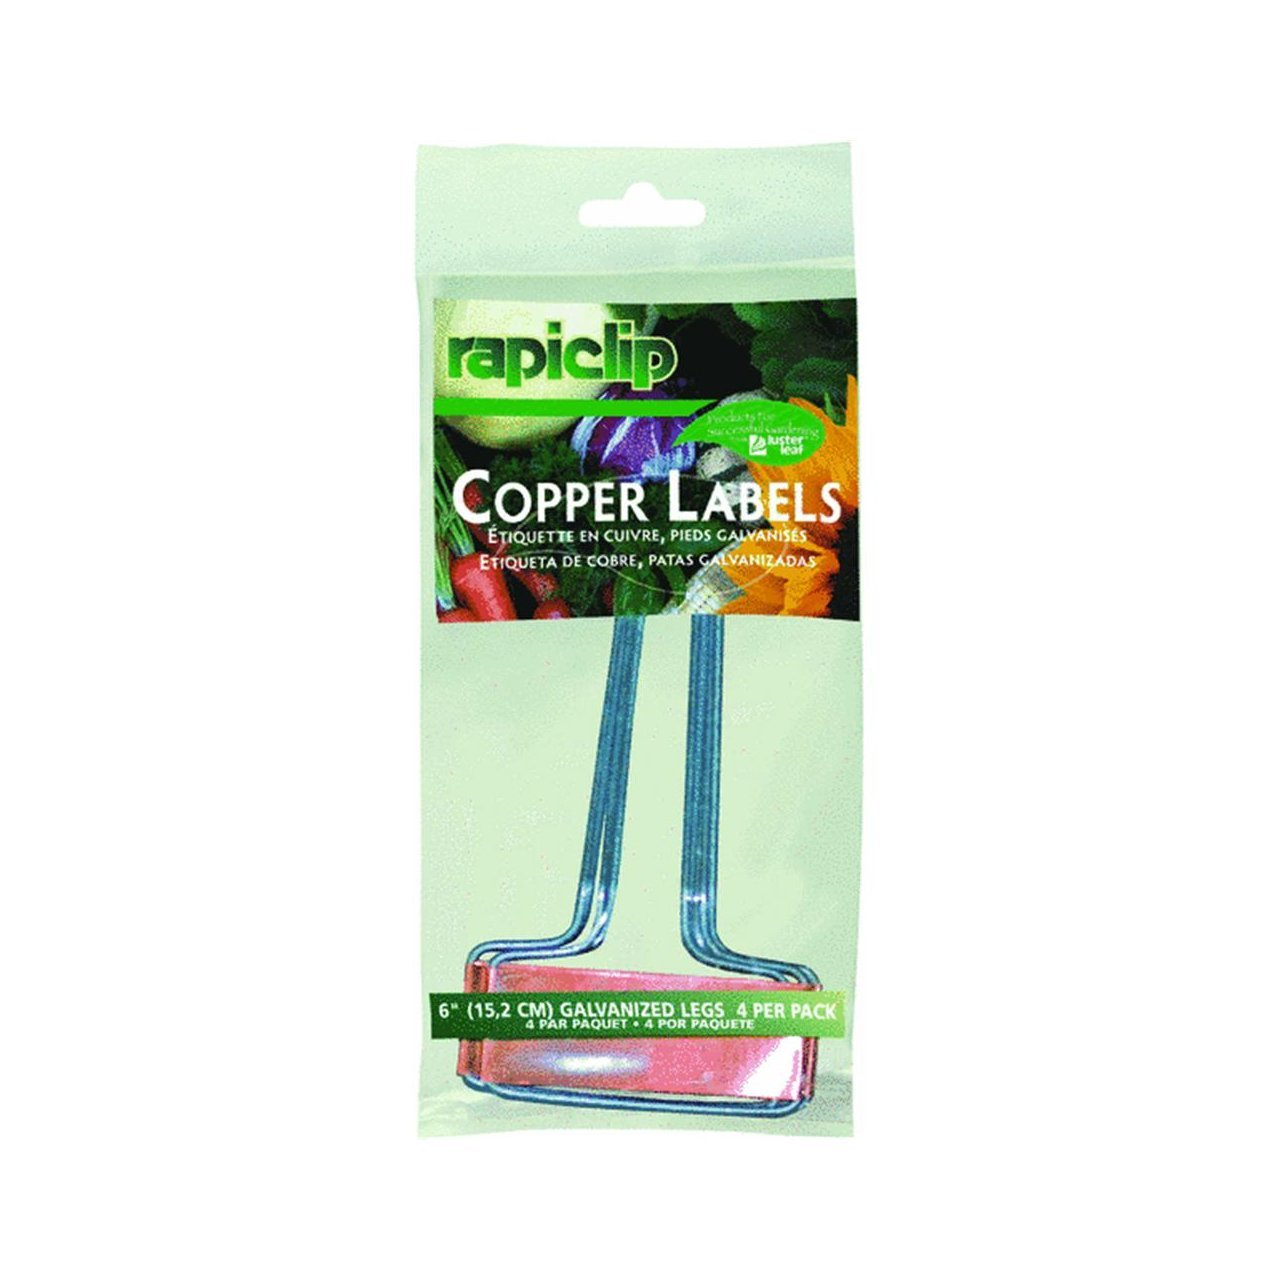 Luster Leaf Inc. Copper Label, Galvanized Legs, 6 in. (4 Pack)